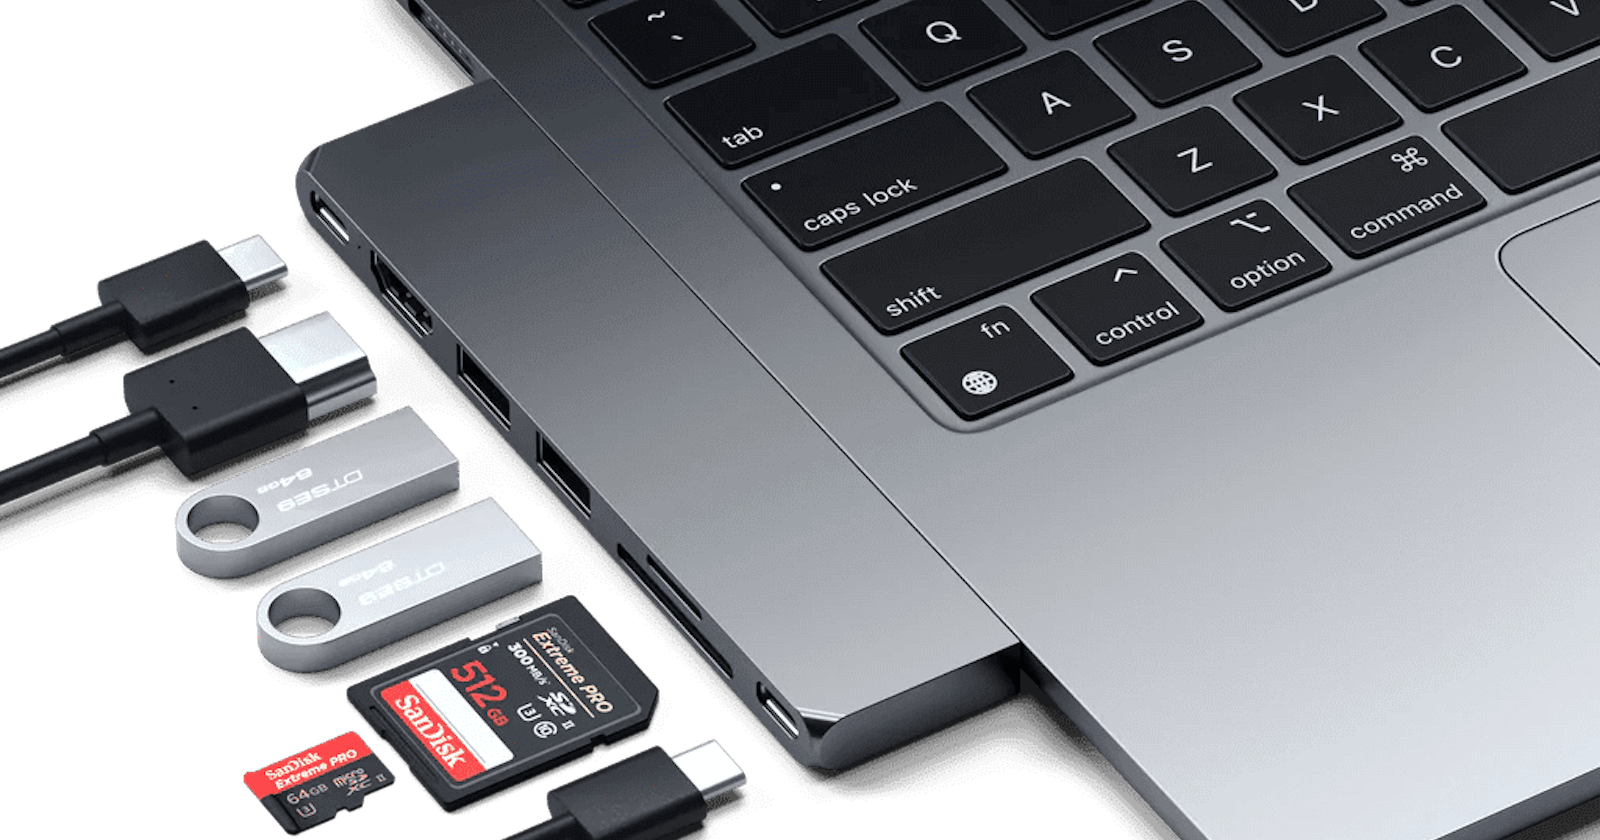 Satechi Introduces Pro Hub Slim Usb-C Hub for Apple’s Latest MacBooks